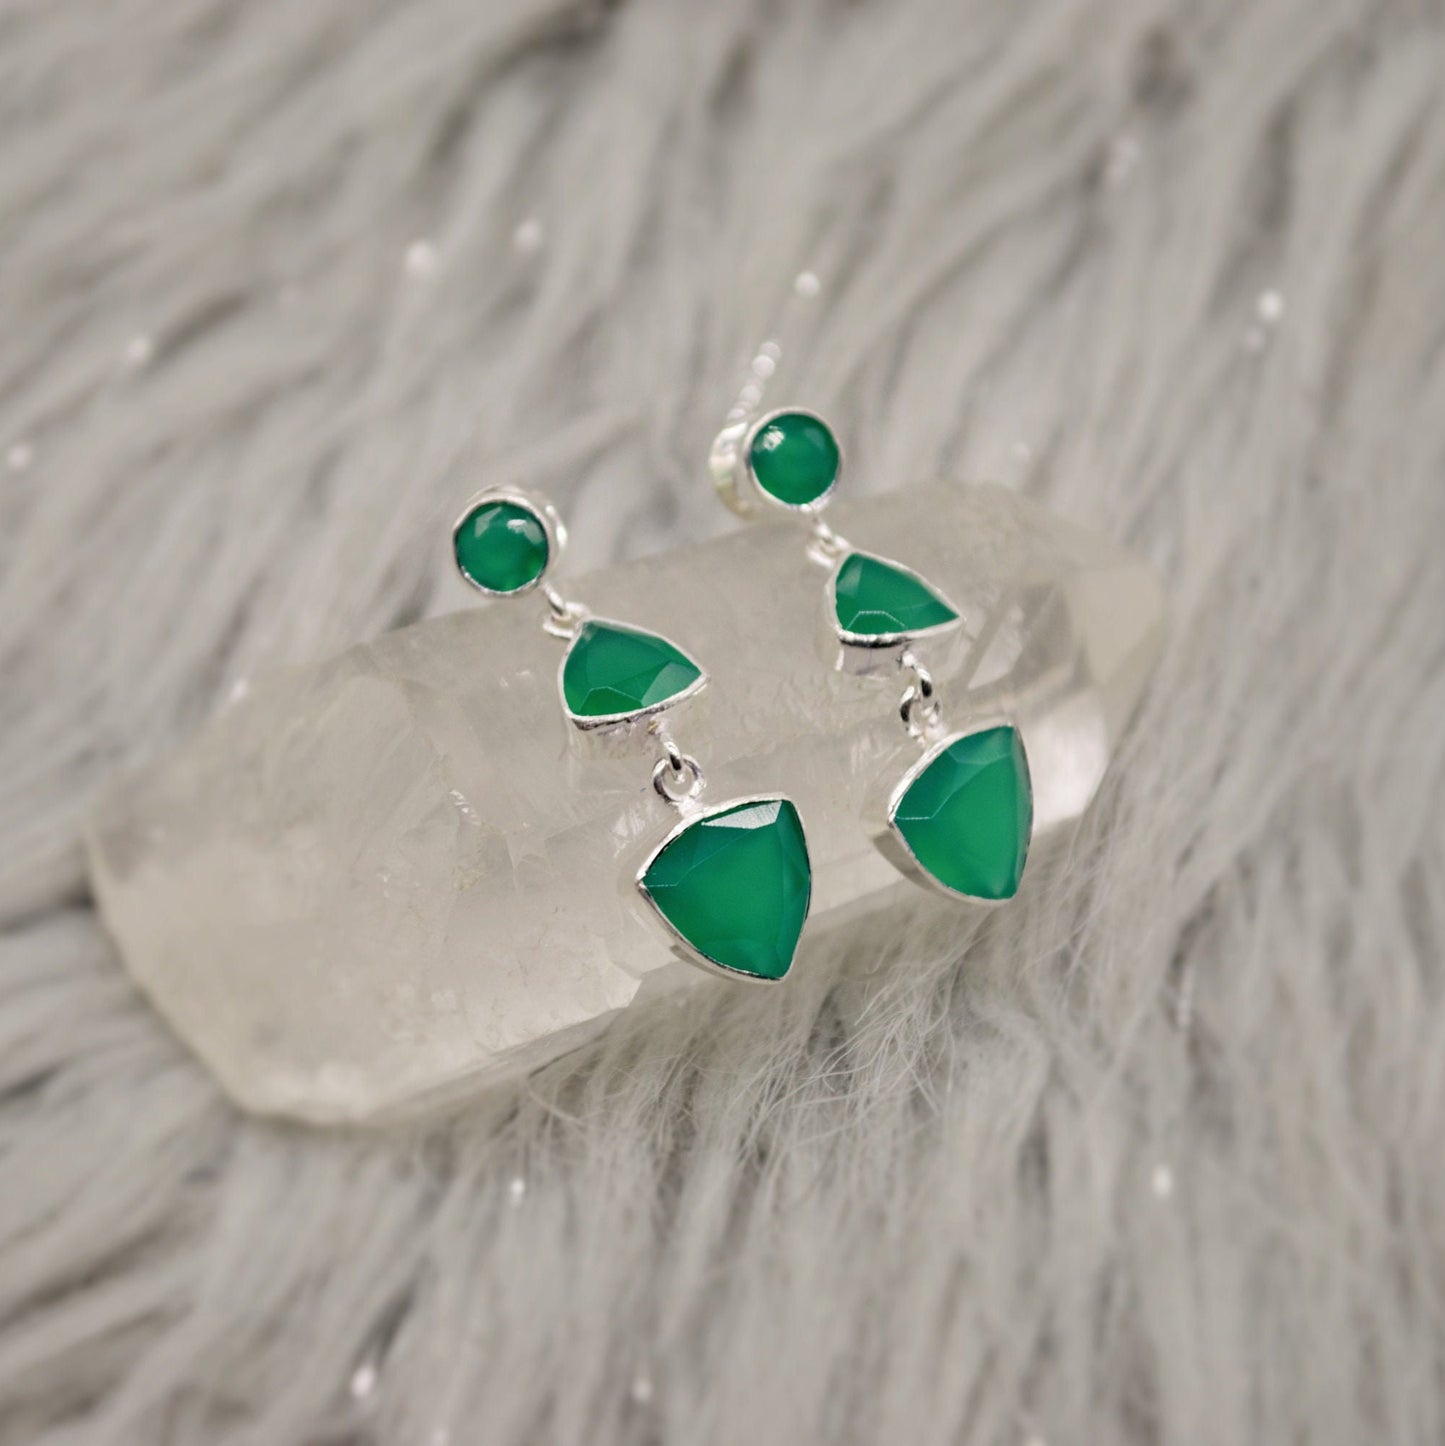 Green Onyx Sterling Silver Earrings, Statement Dangle Drops, Green Onyx Jewelry, Gemstone Earrings, Gifts For Her